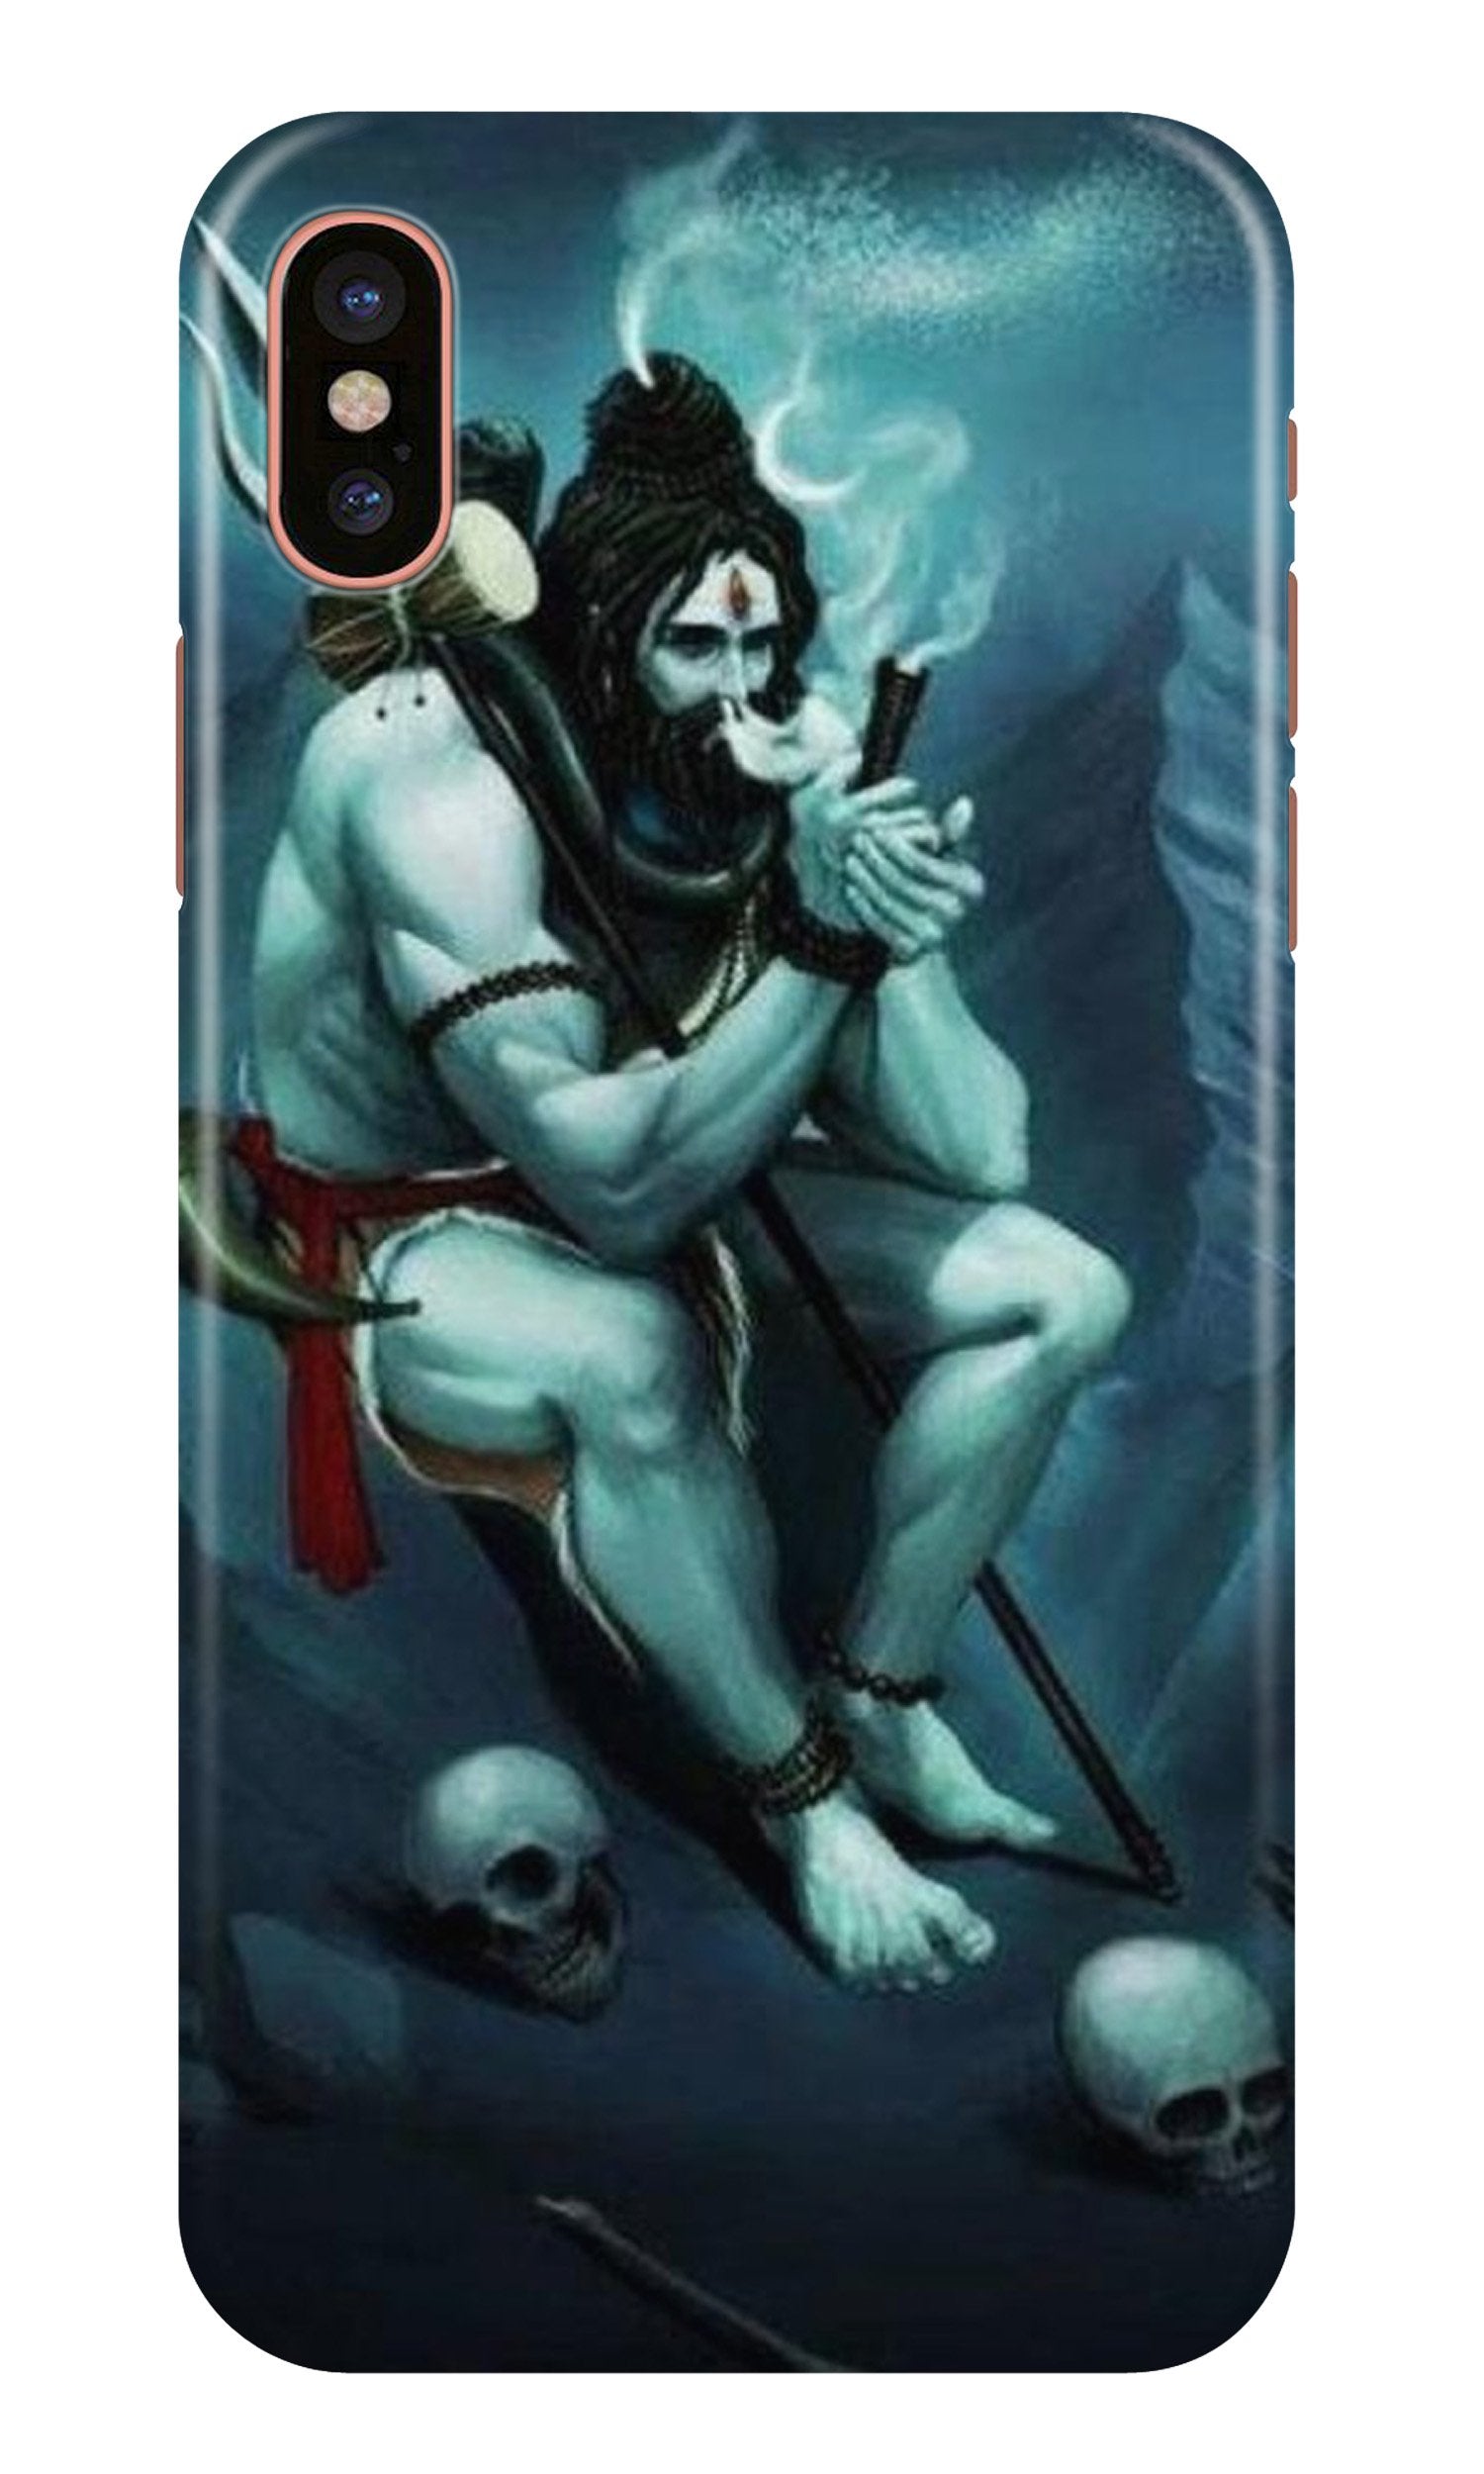 Lord Shiva Mahakal2 Case for iPhone X